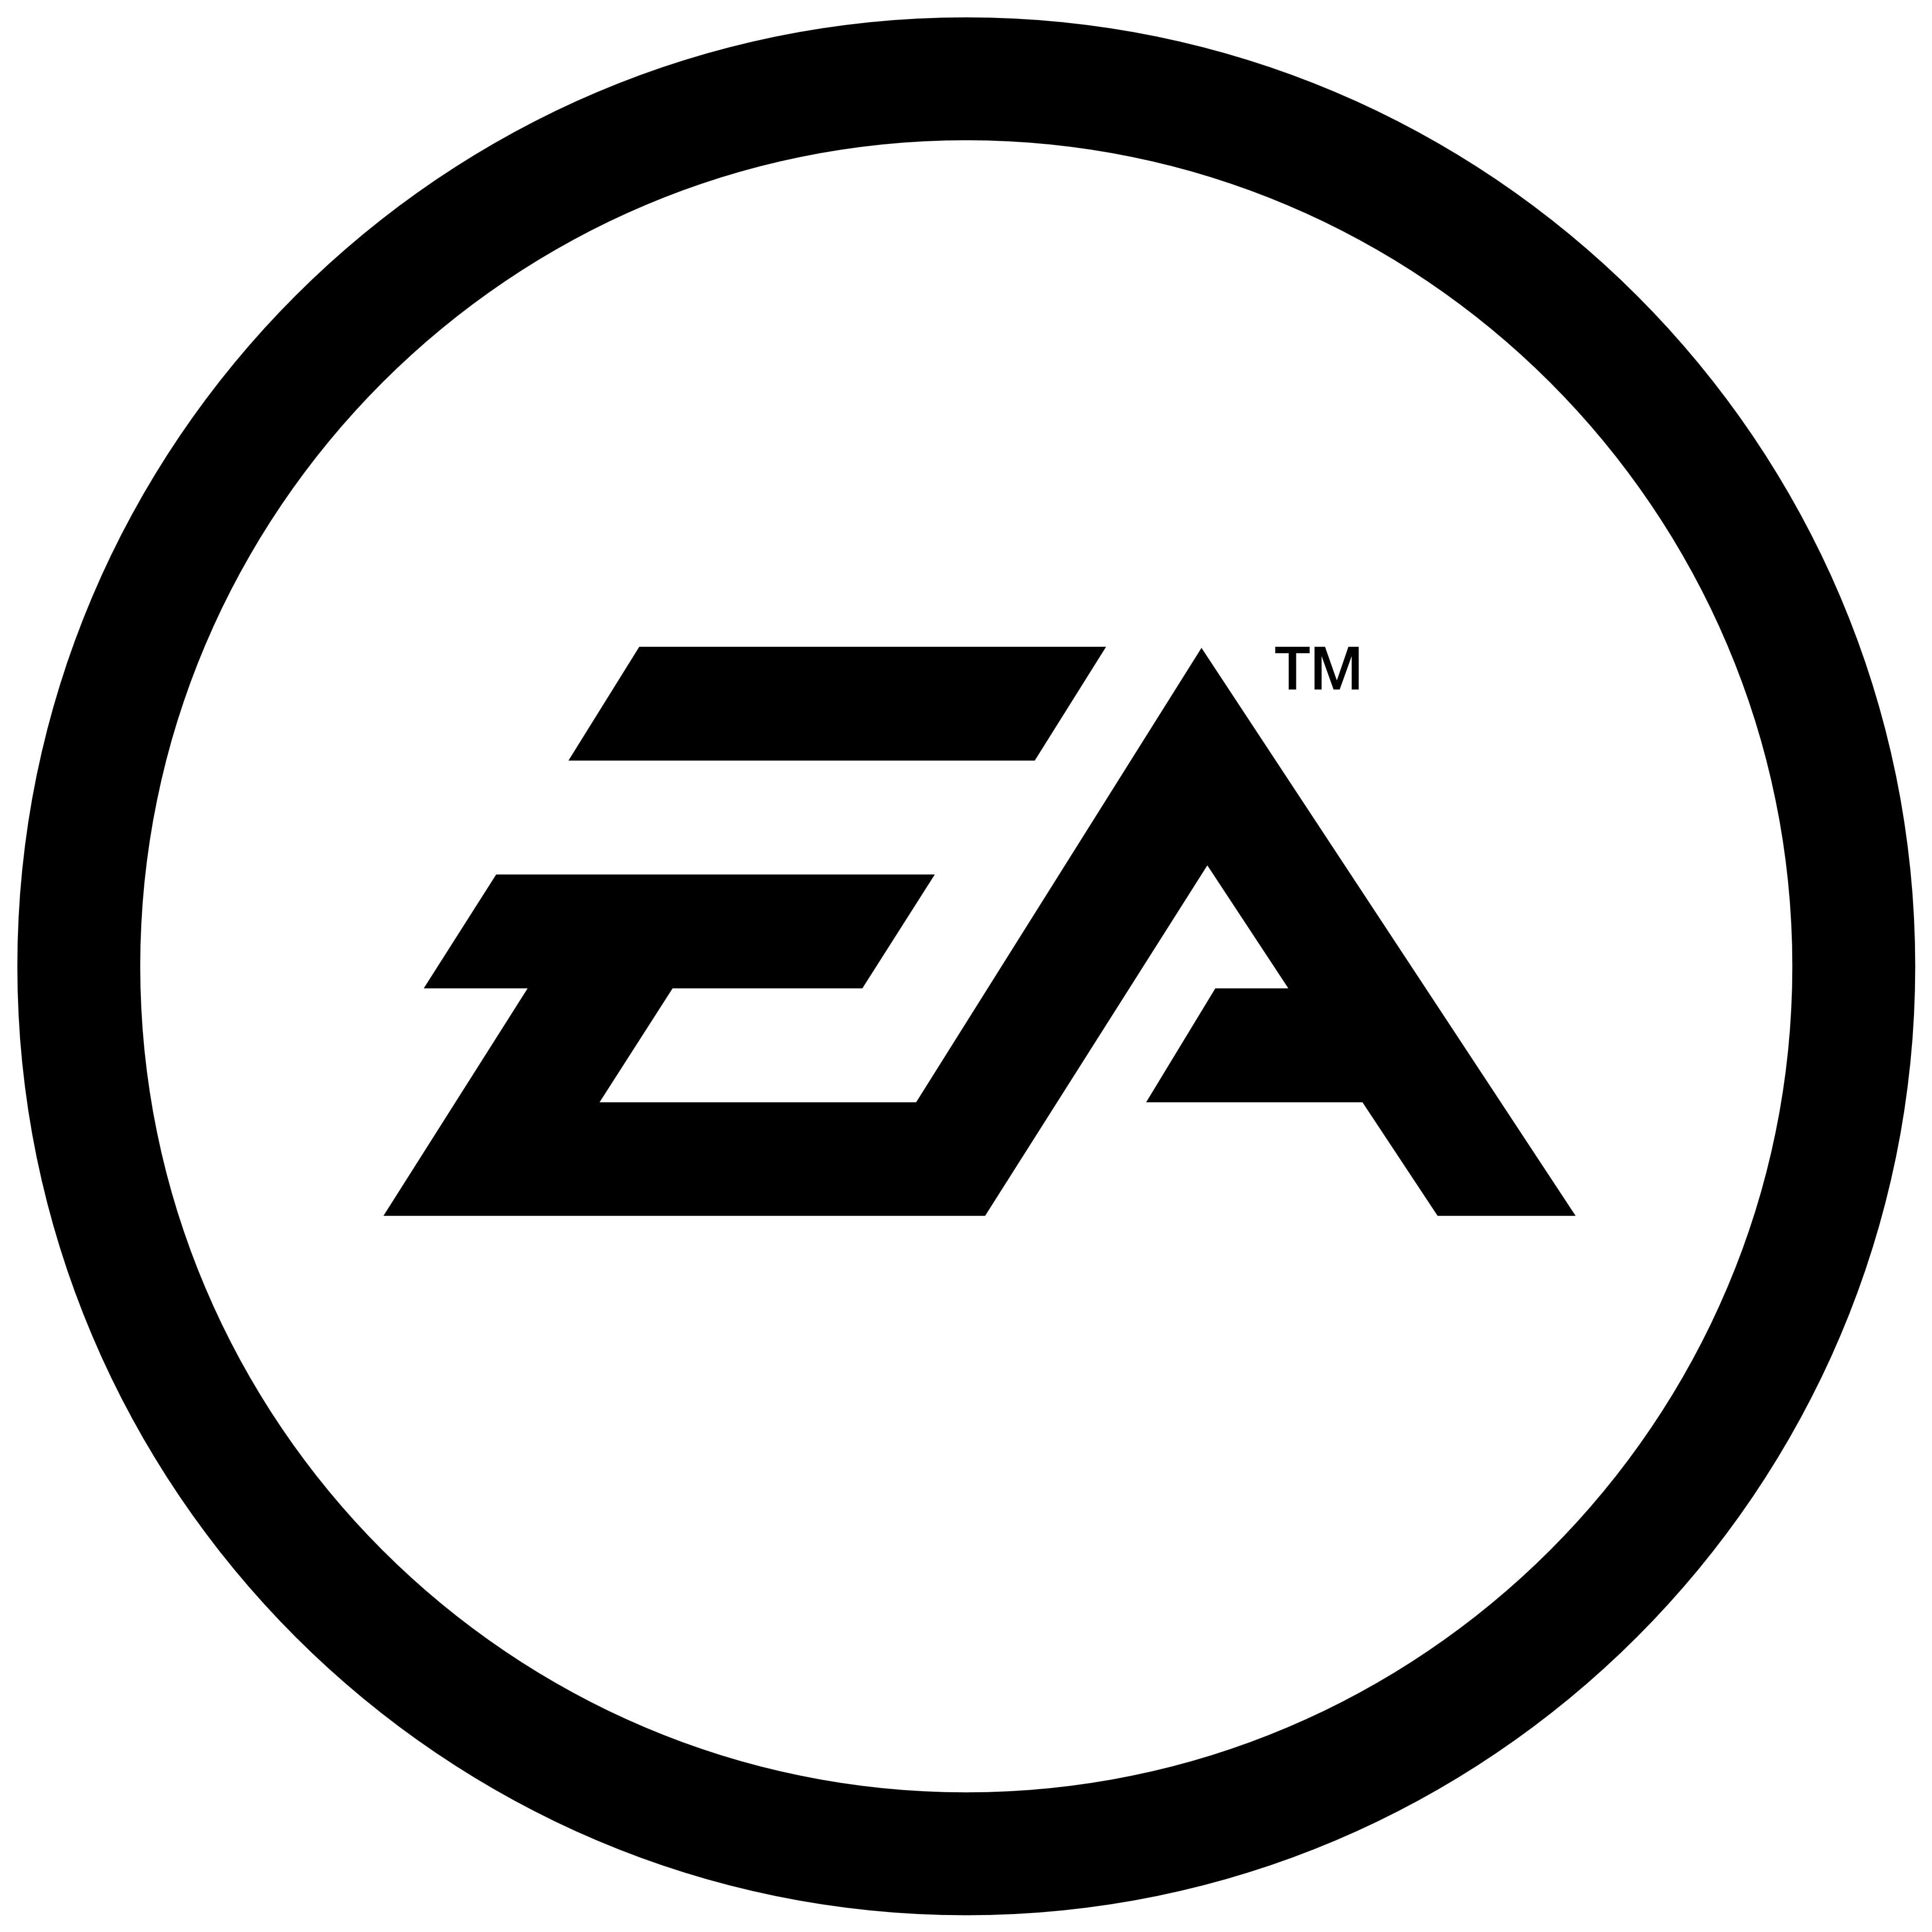 EA Logo Transparent Images